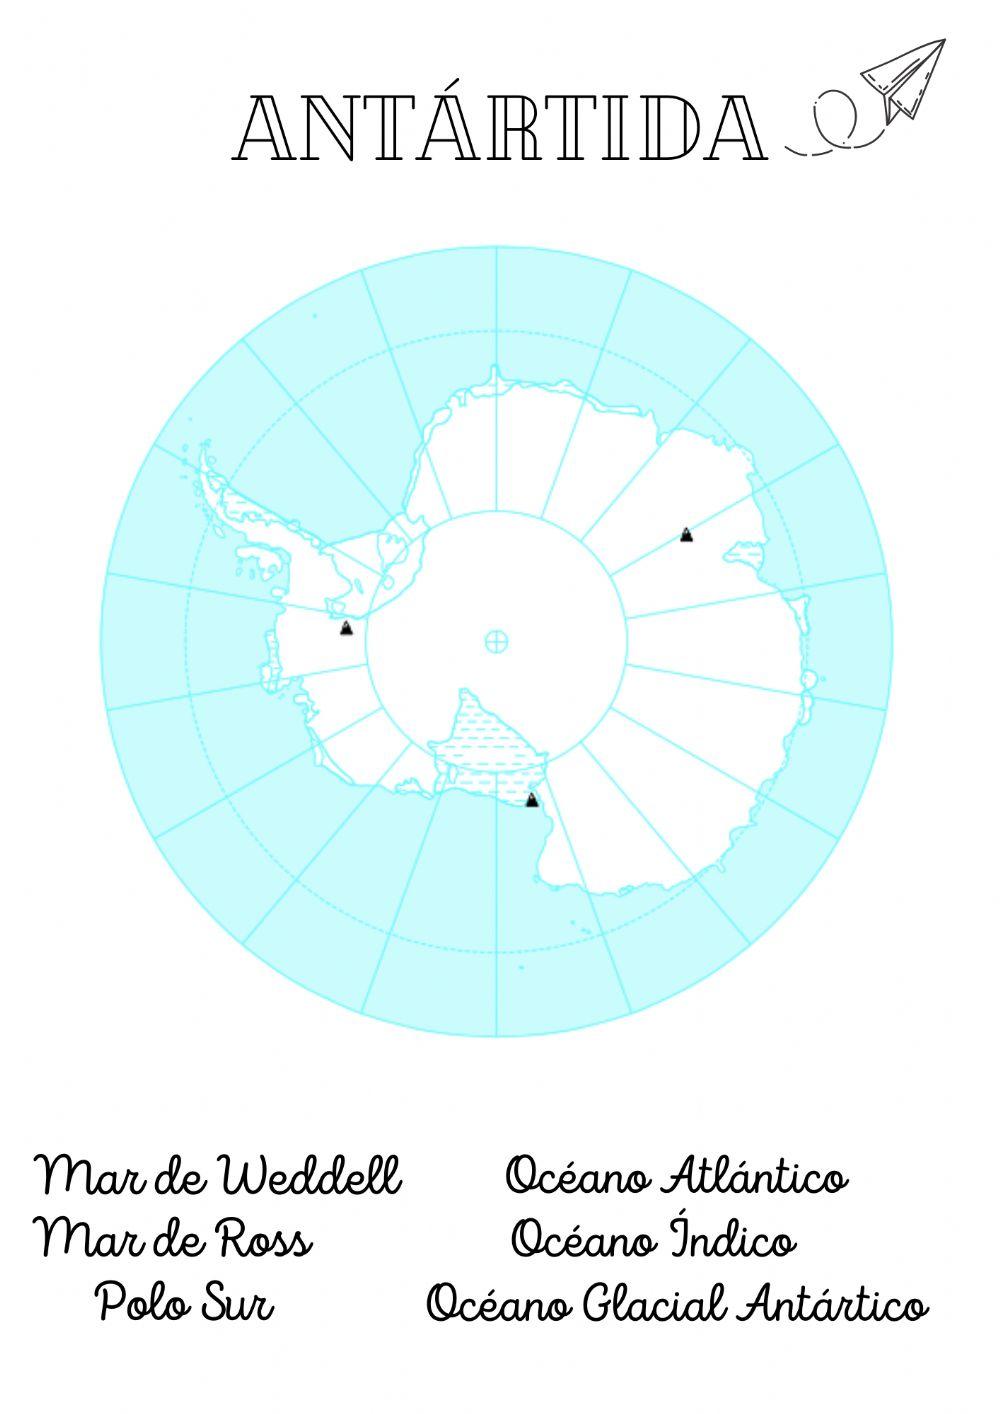 Antartida. Mapa mudo fisico agua